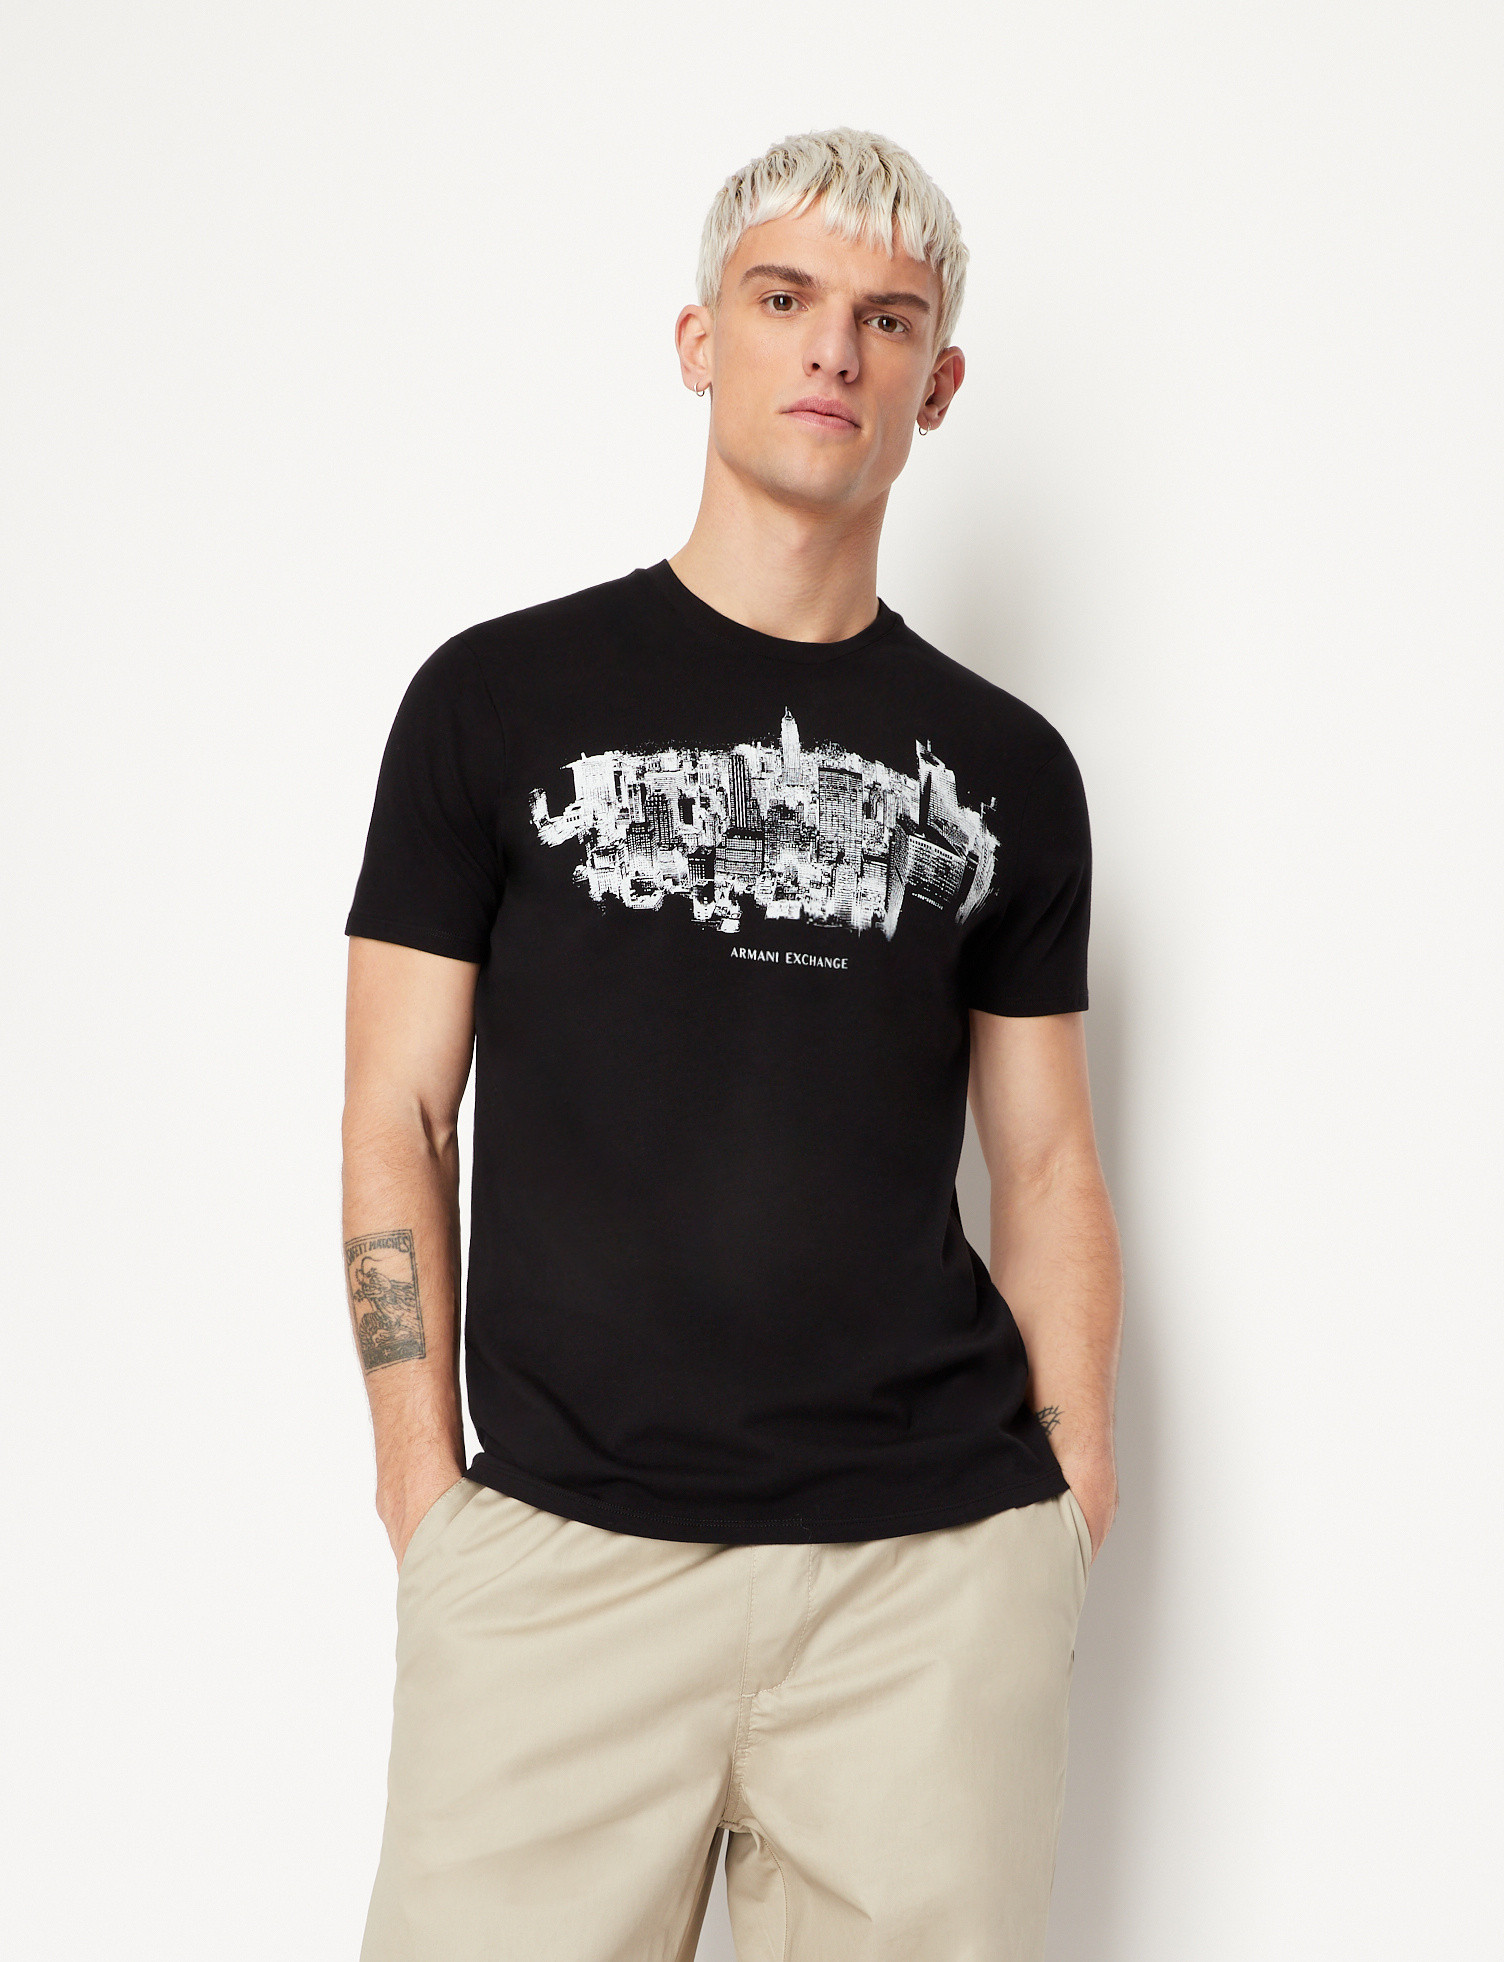 Armani Exchange - Slim fit printed T-shirt, Black, large image number 1